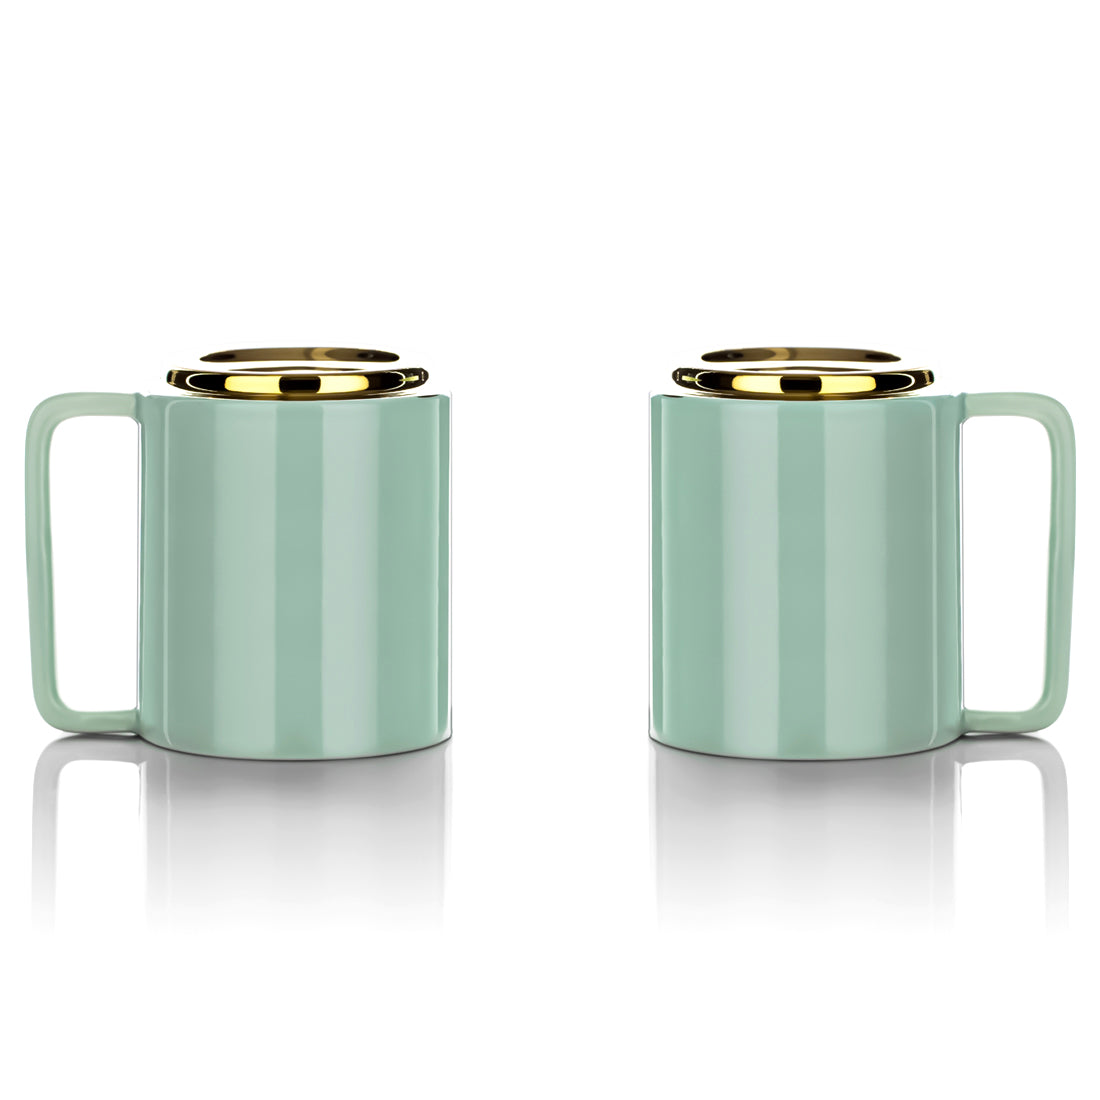 Buy Ceramic Coffee Mug online | Set of 2 Combo At Lowest Price: Lafeeca